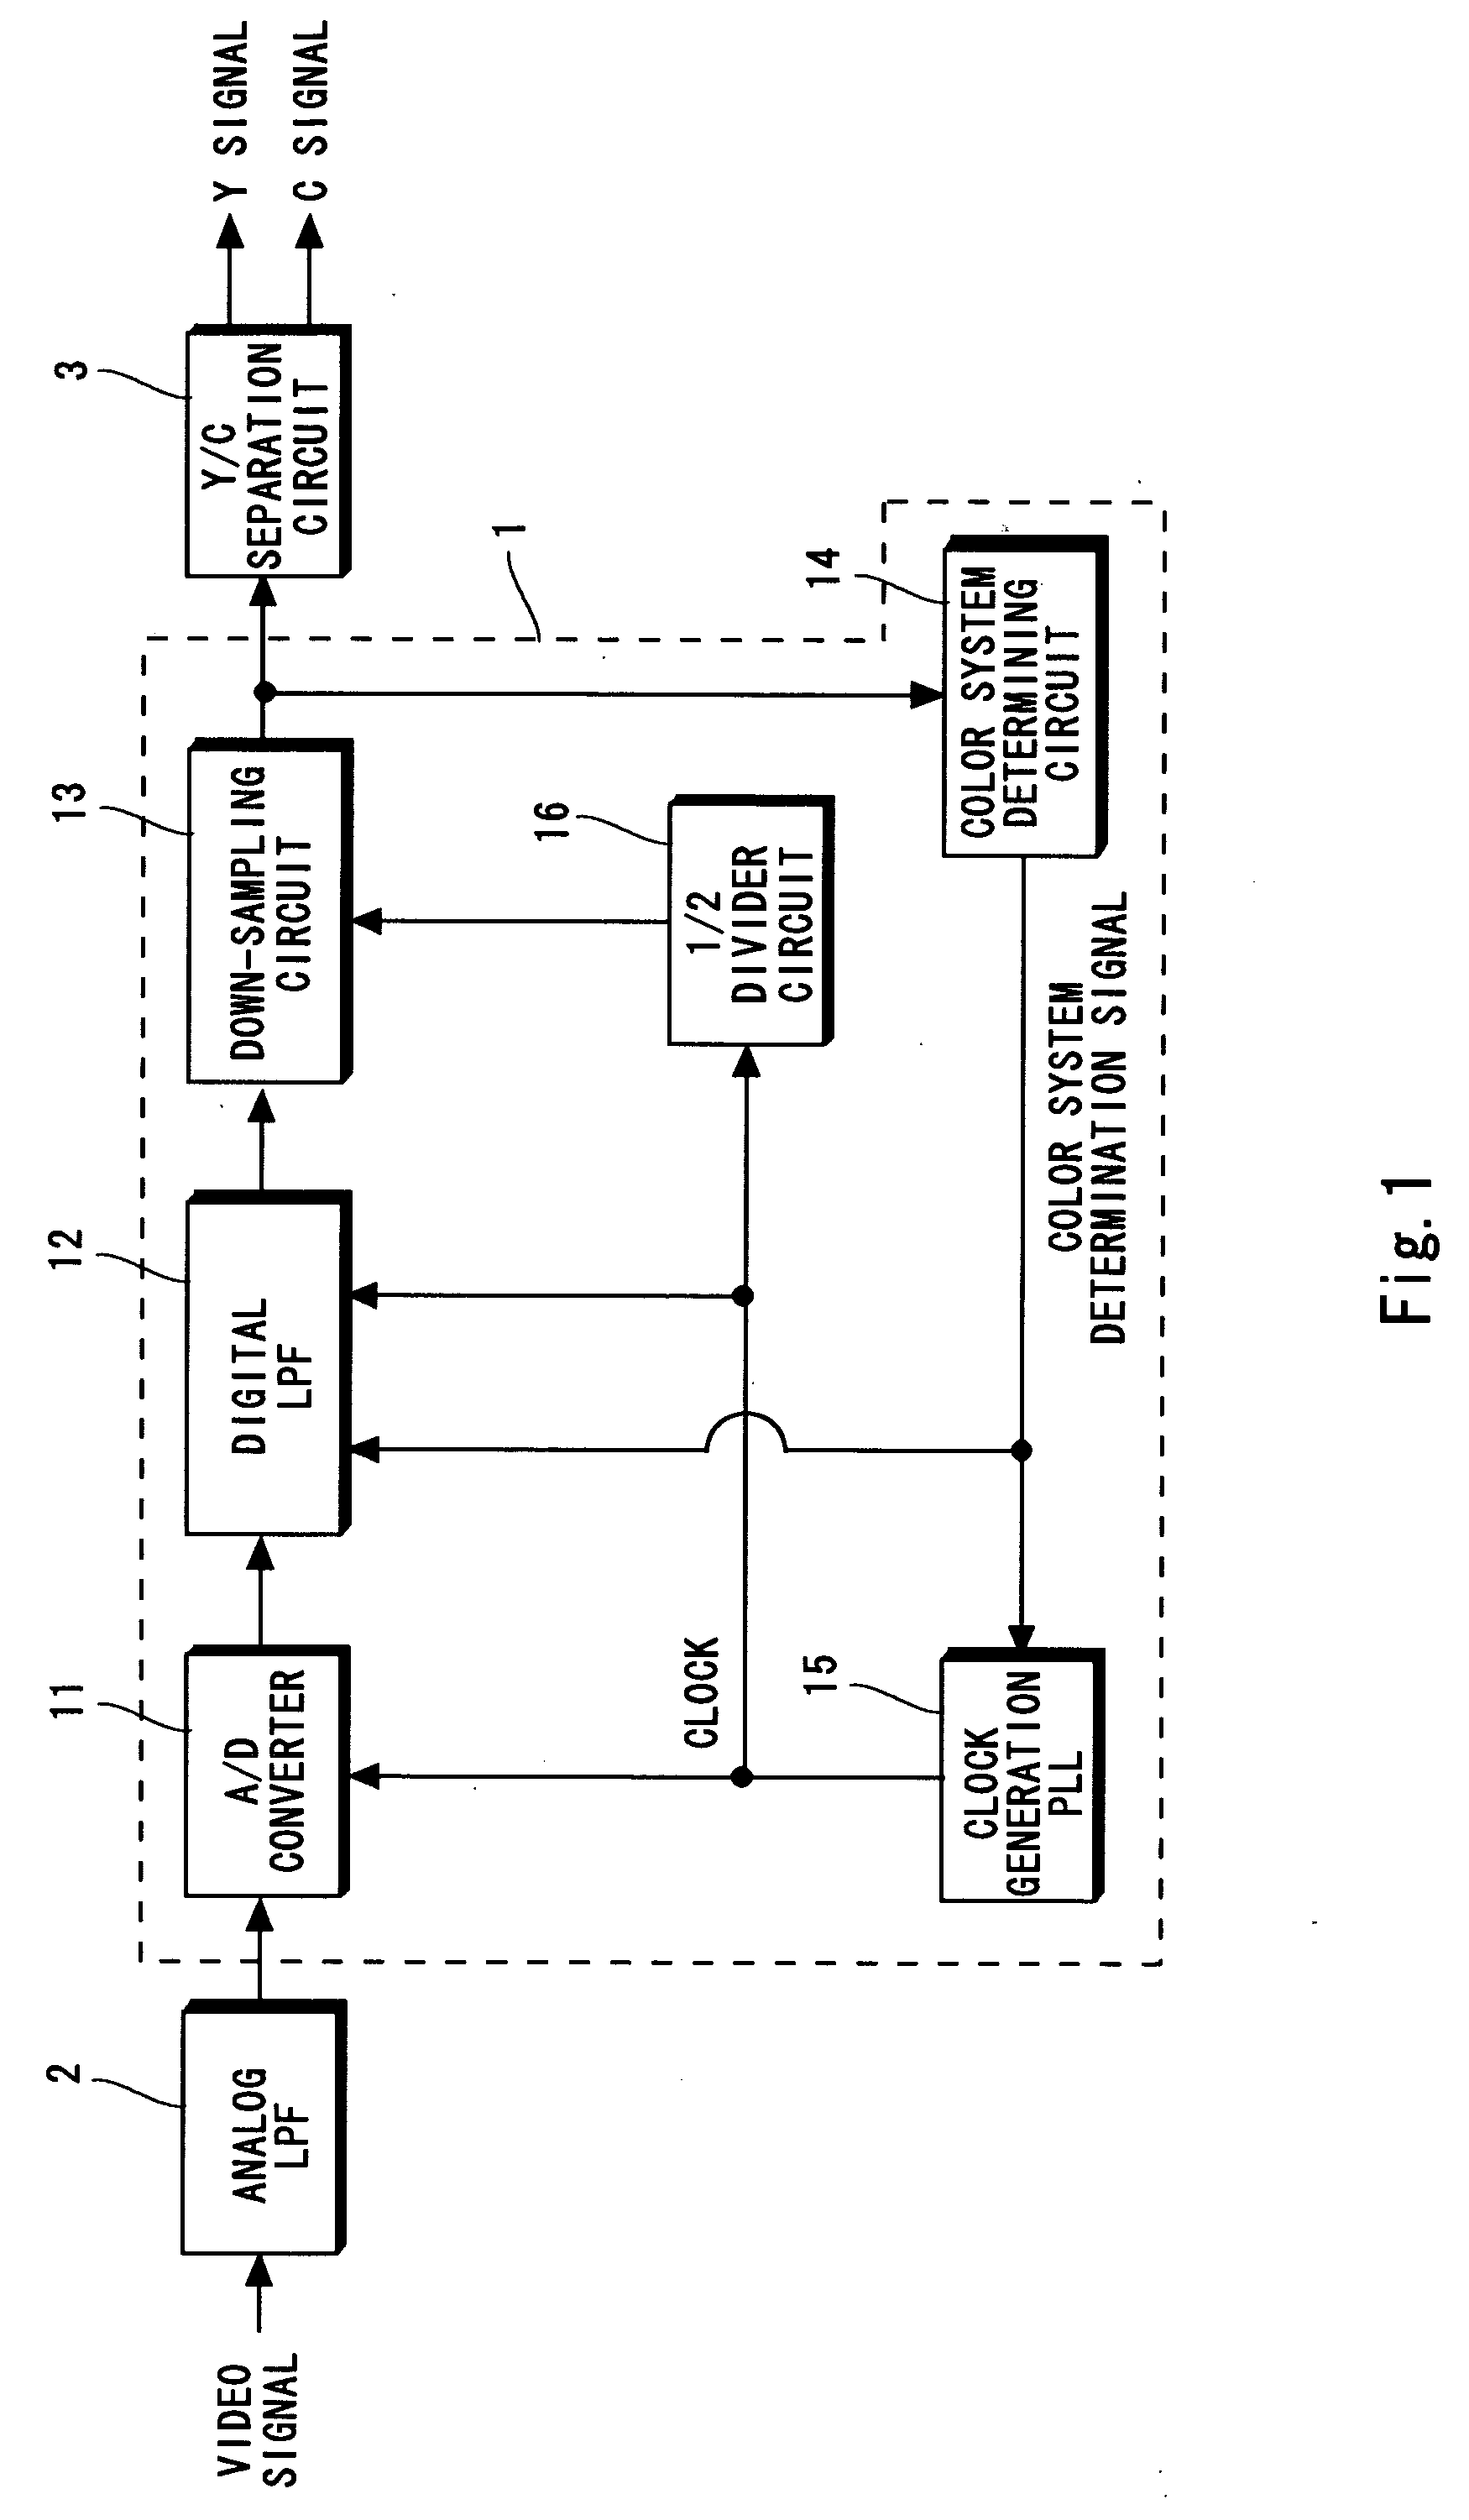 Over-sampling A/D converting circuit